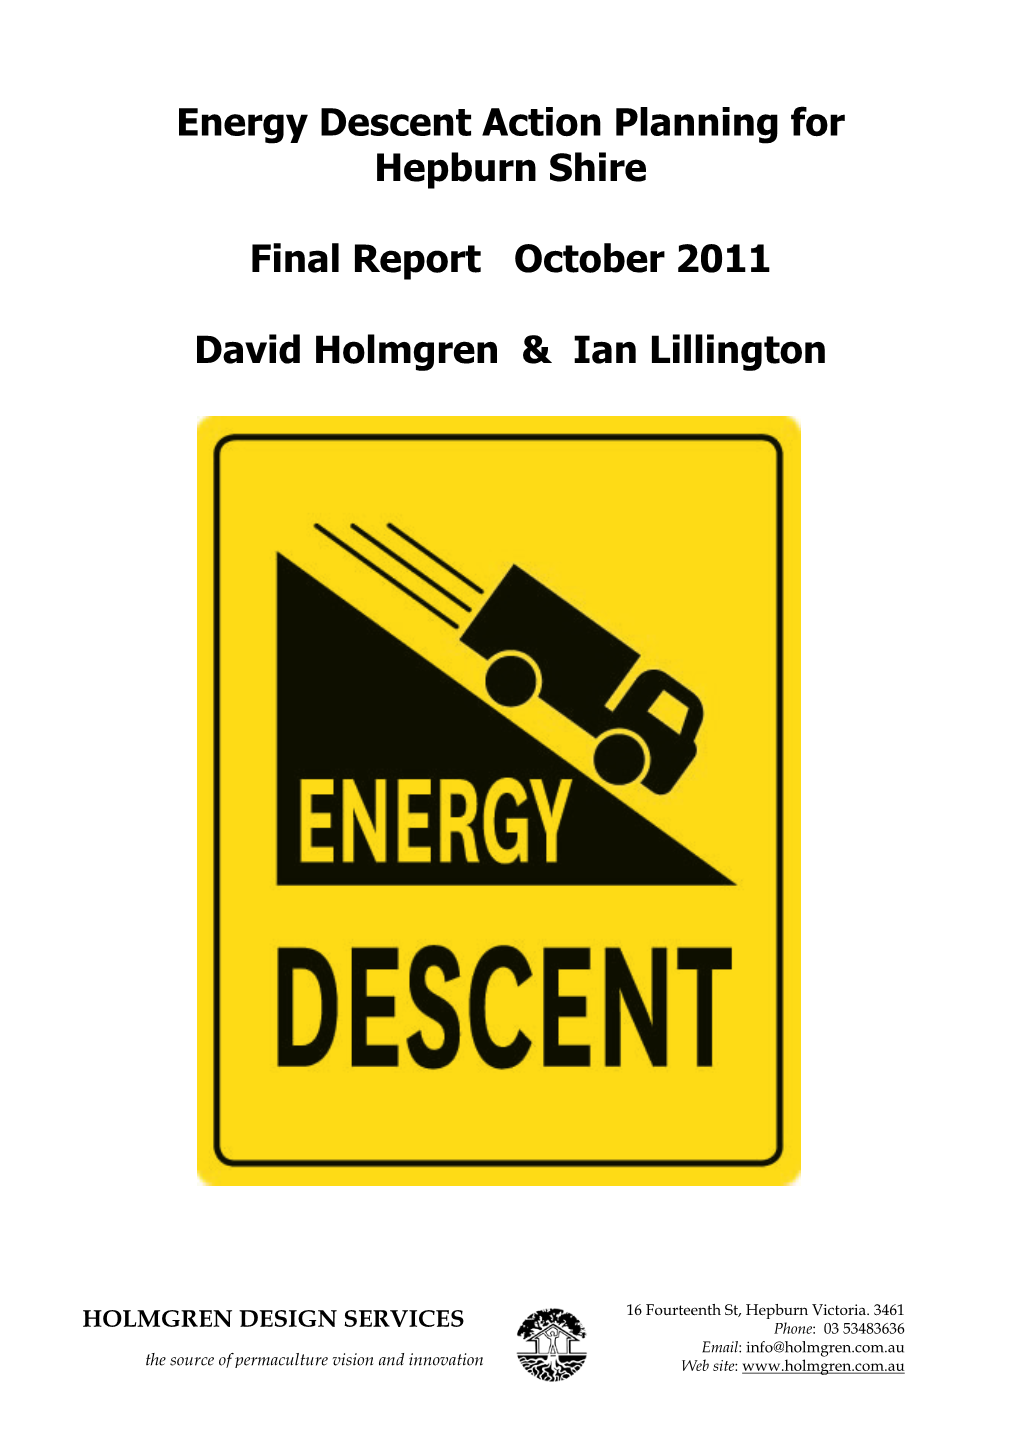 Energy Descent Action Planning for Hepburn Shire Final Report